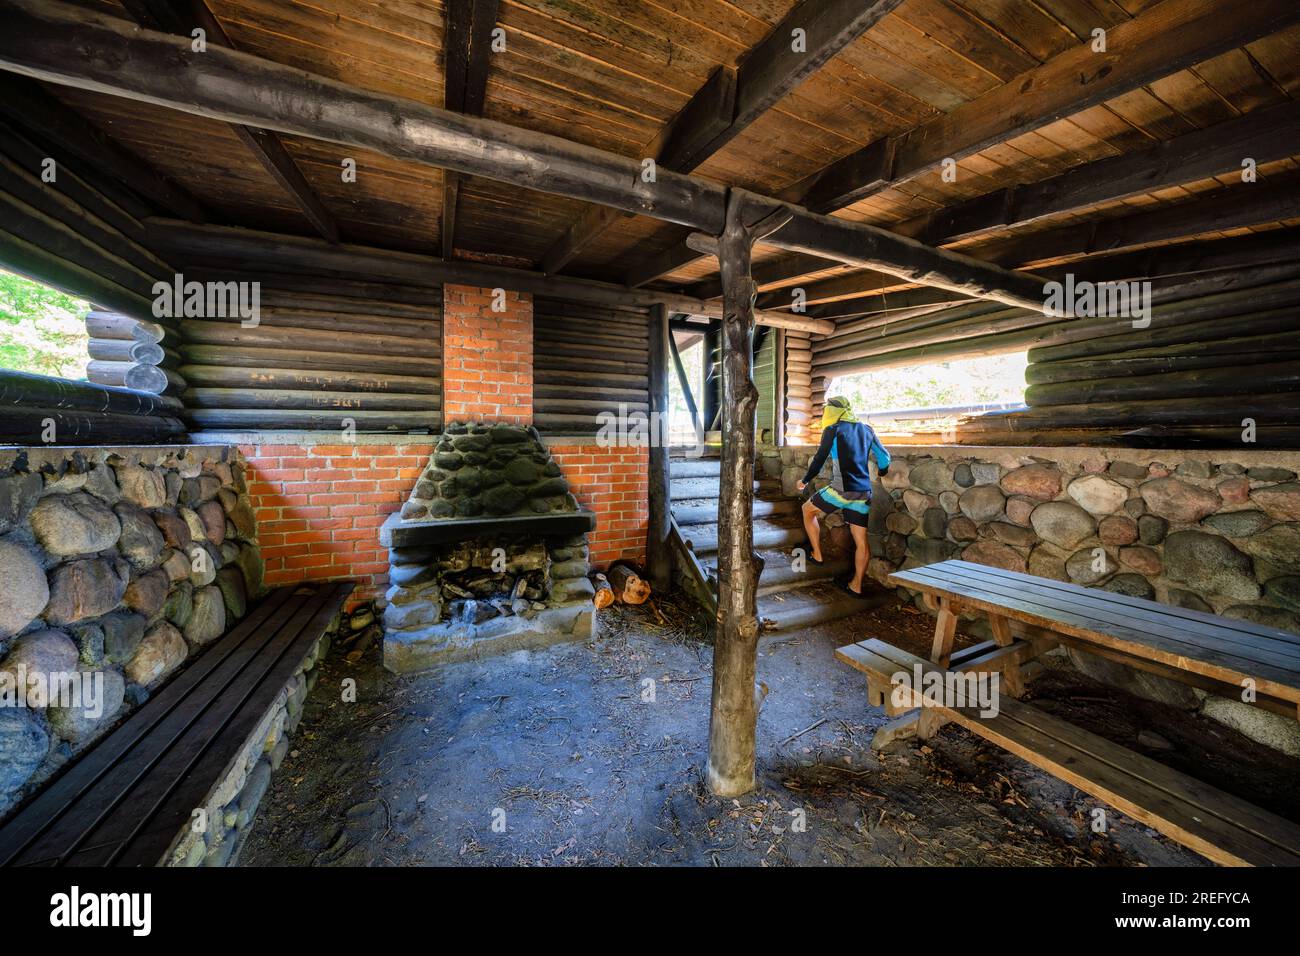 A cooking shelter at Malkasaari island, Helsinki, Finland Stock Photo